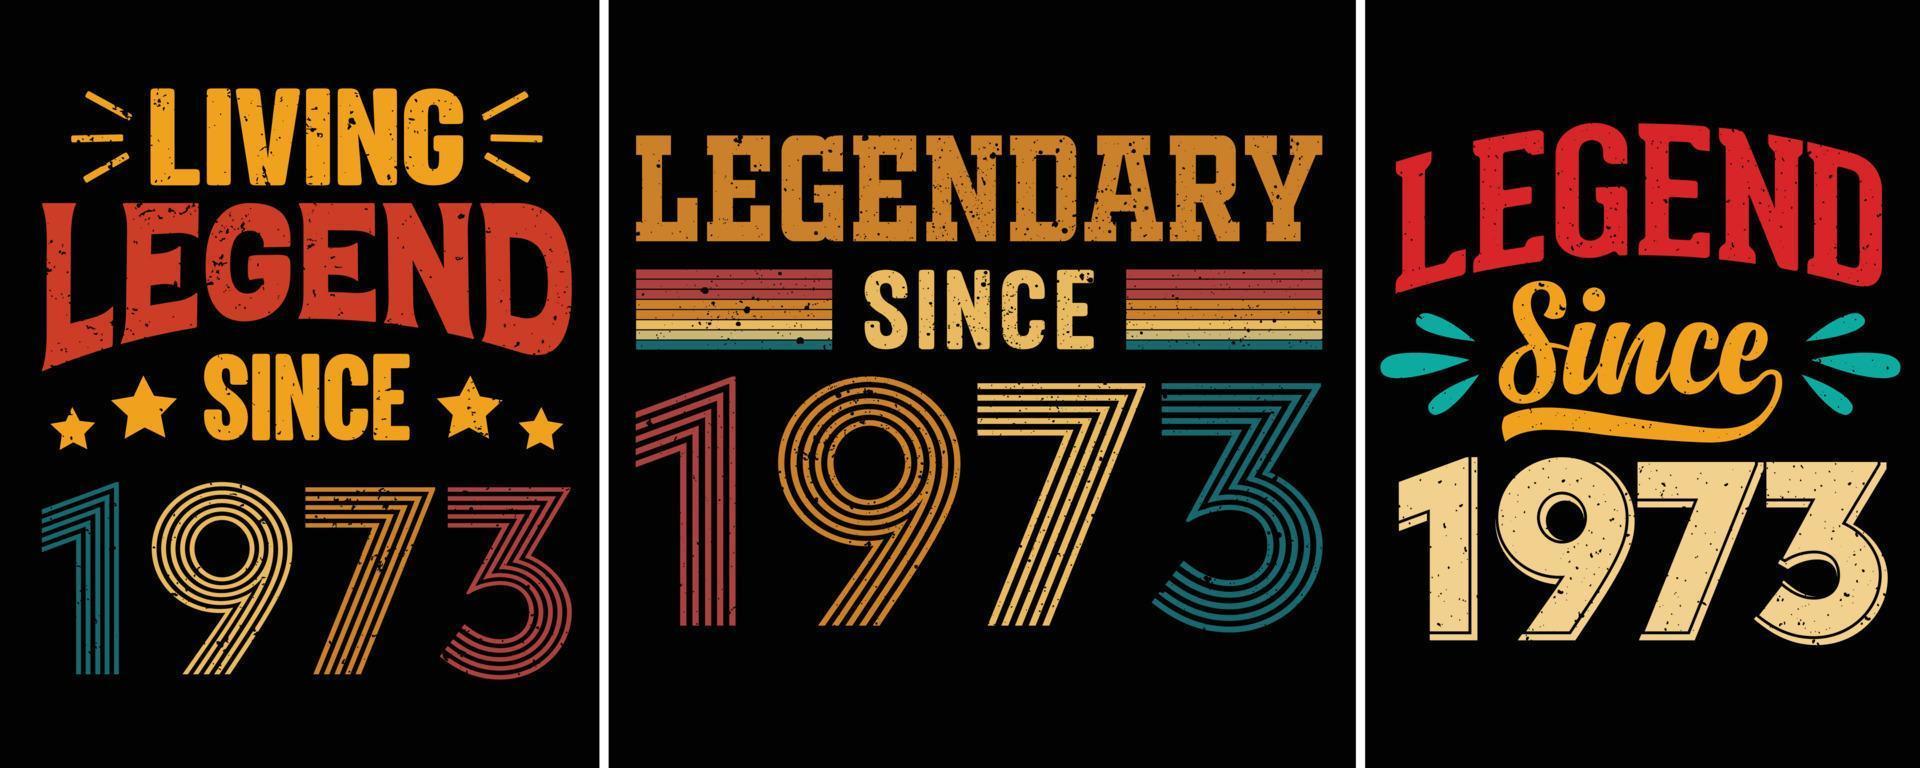 Living Legend Since 1973, Legendary Since 1973, Legend Since 1973, Typography T-shirt Design, Birthday Gift vector